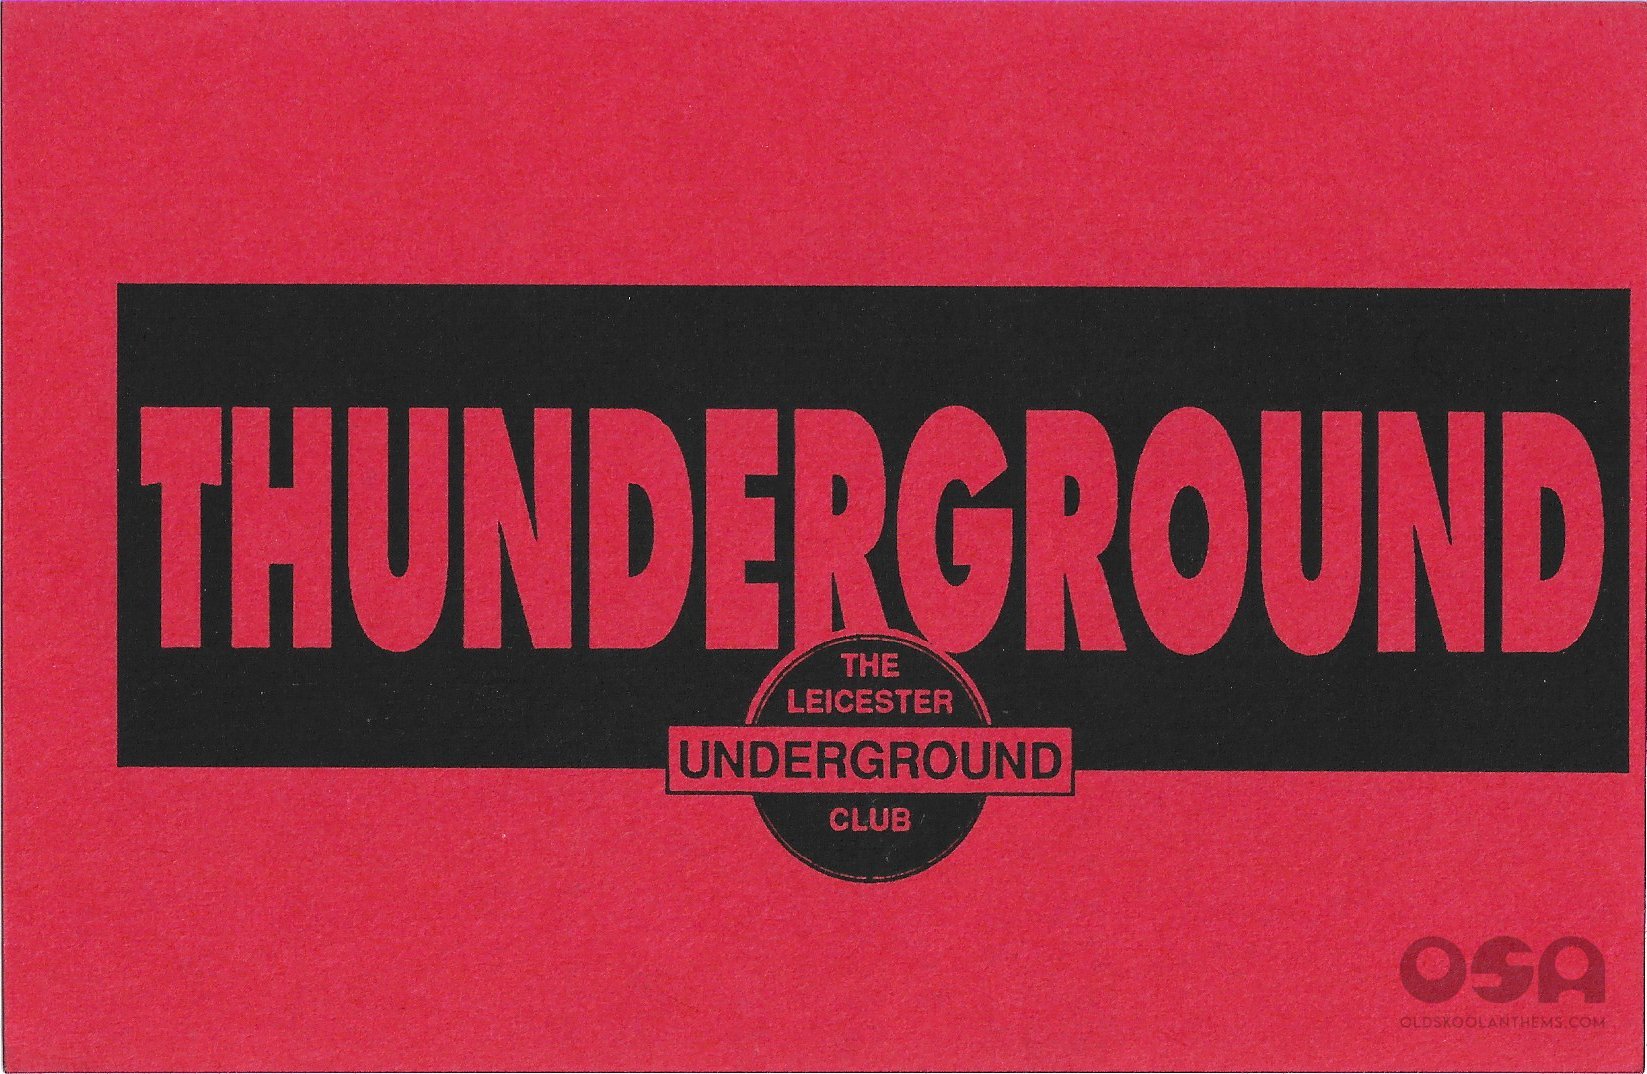 Thunderground @ The Leicester Underground Club - 28th January 1993 - A .jpg